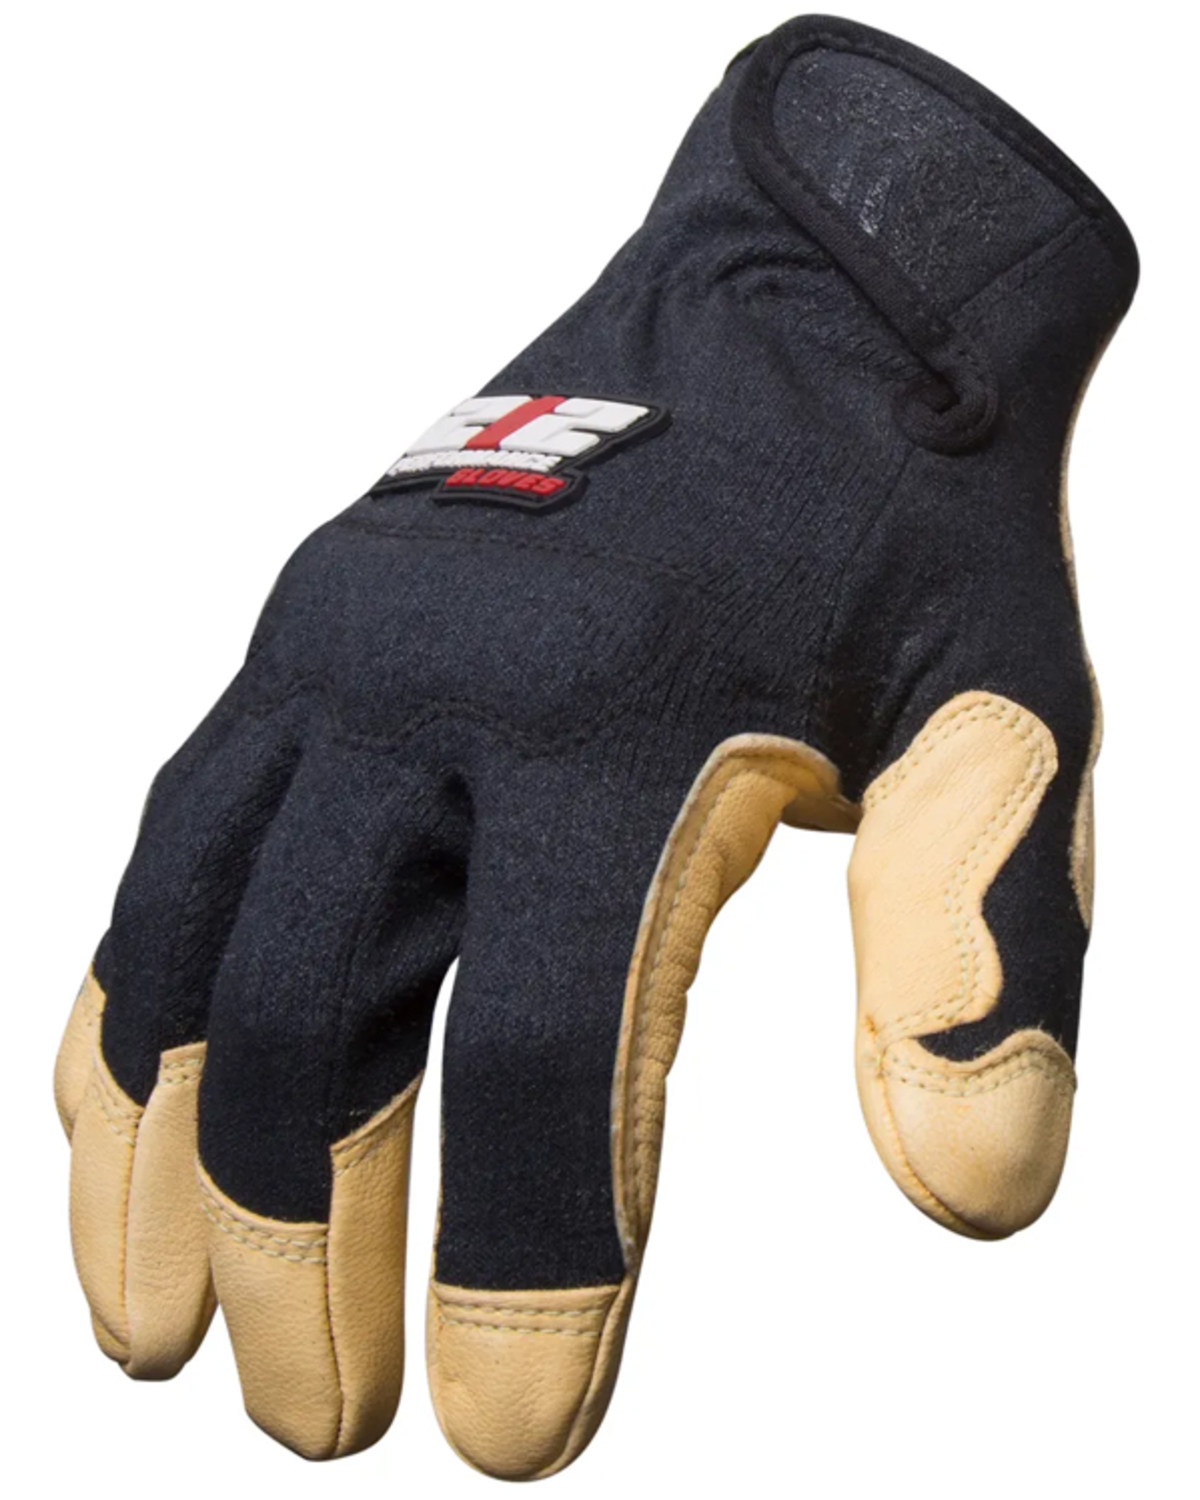 212 Performance Men's FR Fabricator Cut 2 Leather Welding Gloves - Black